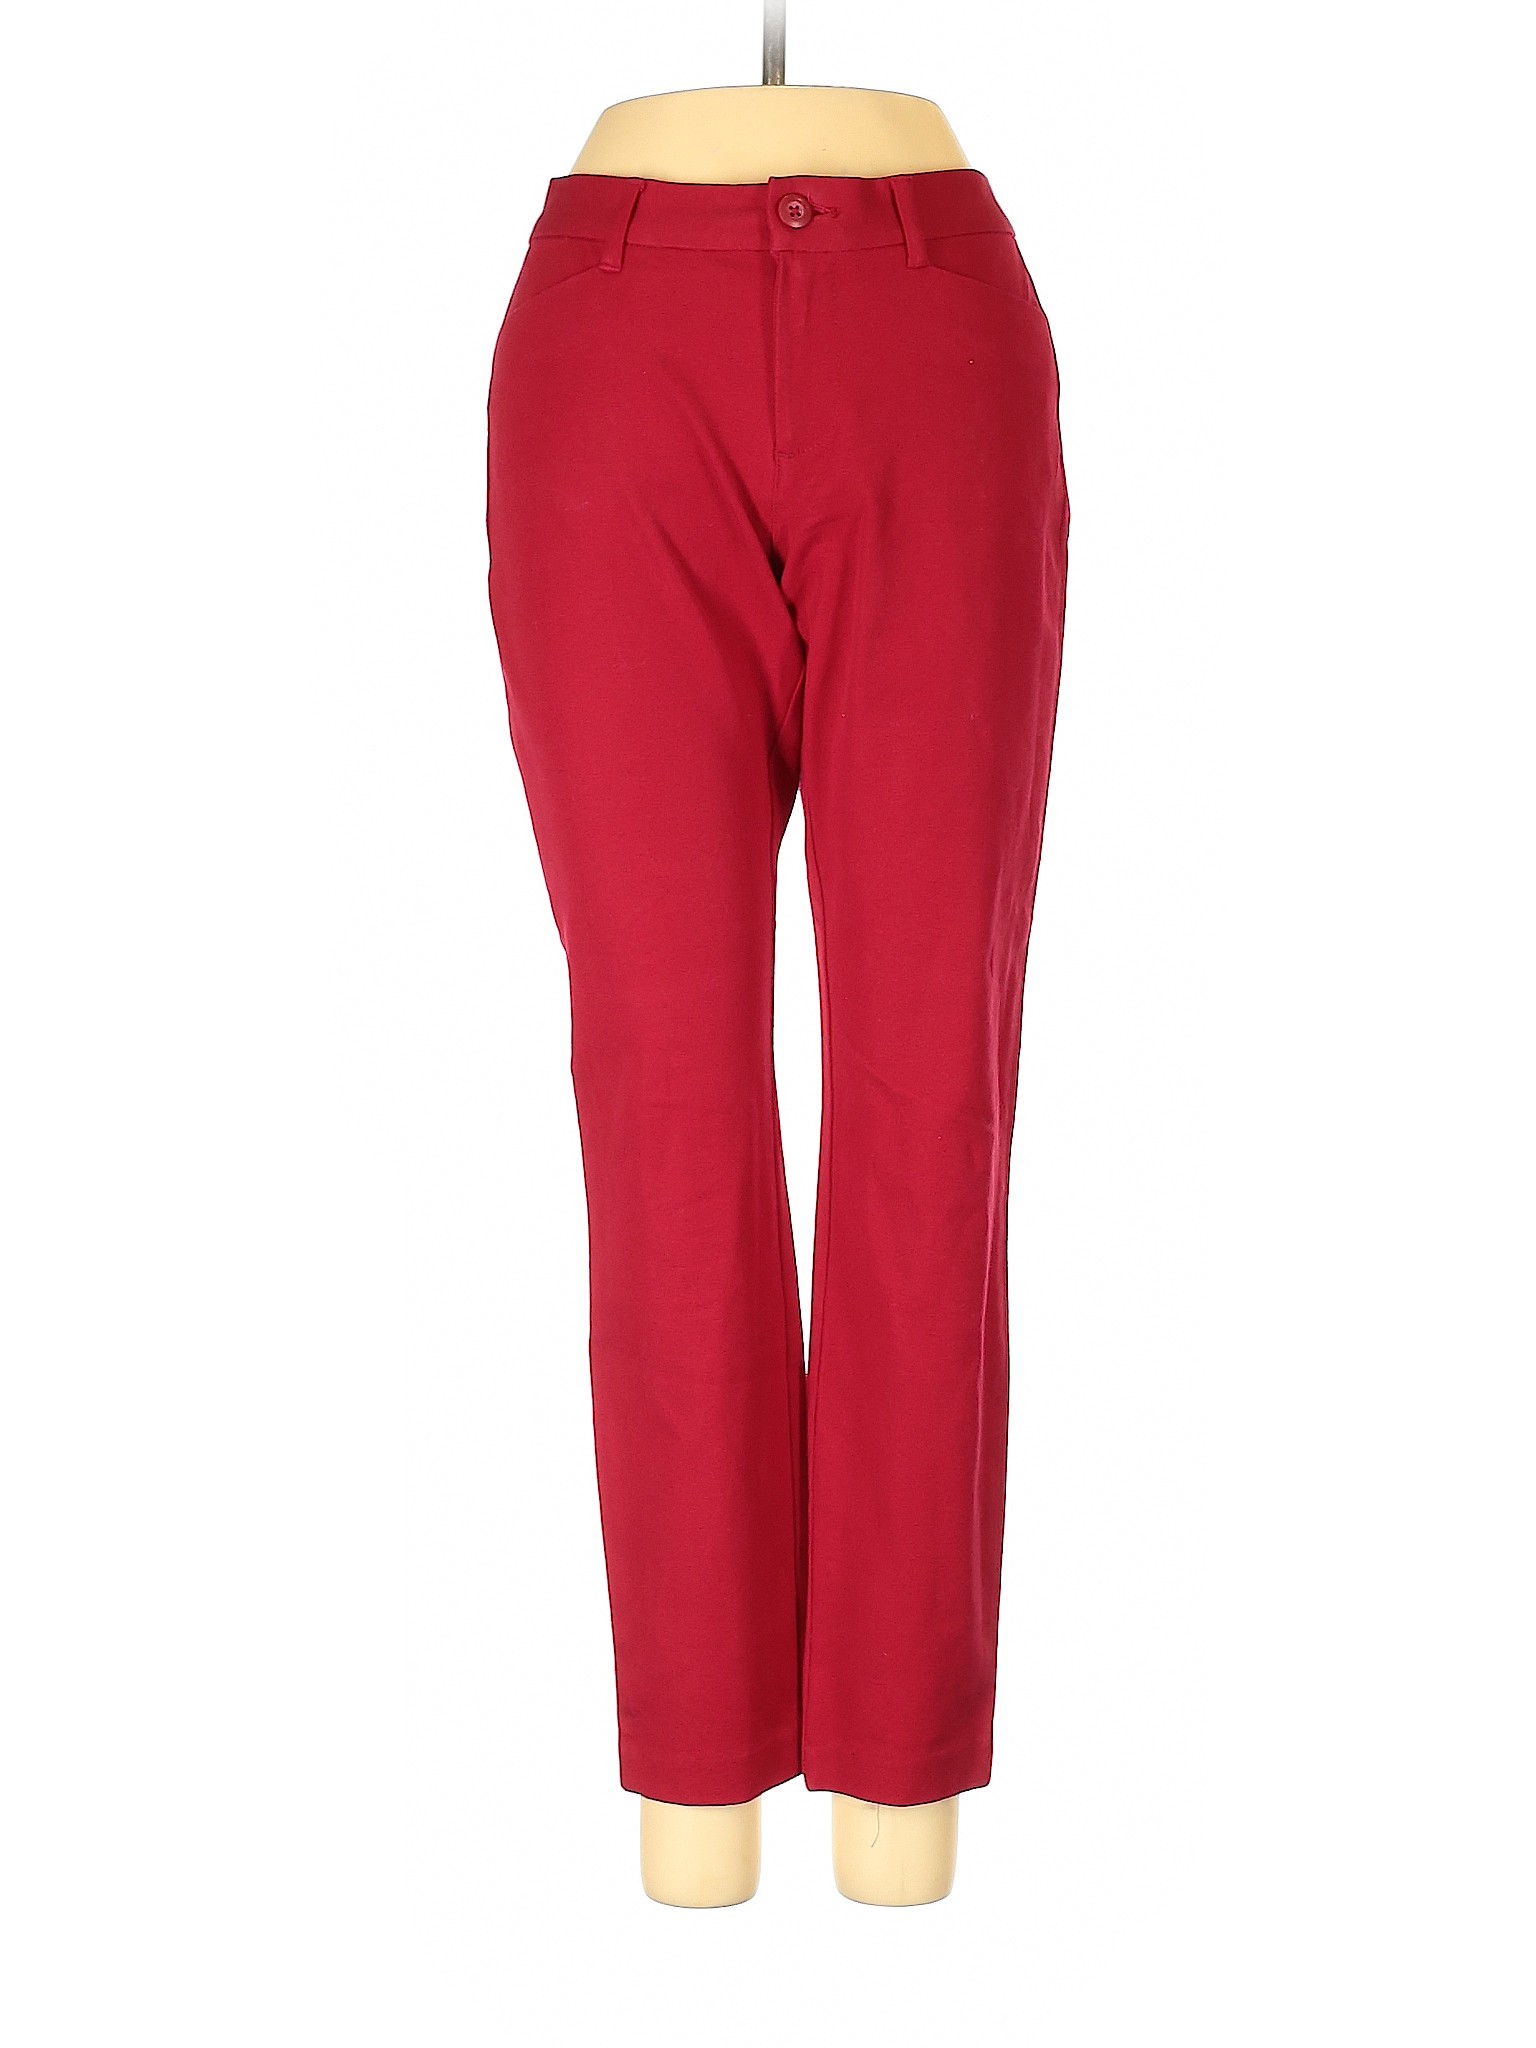 Gap Women Red Casual Pants 0 | eBay